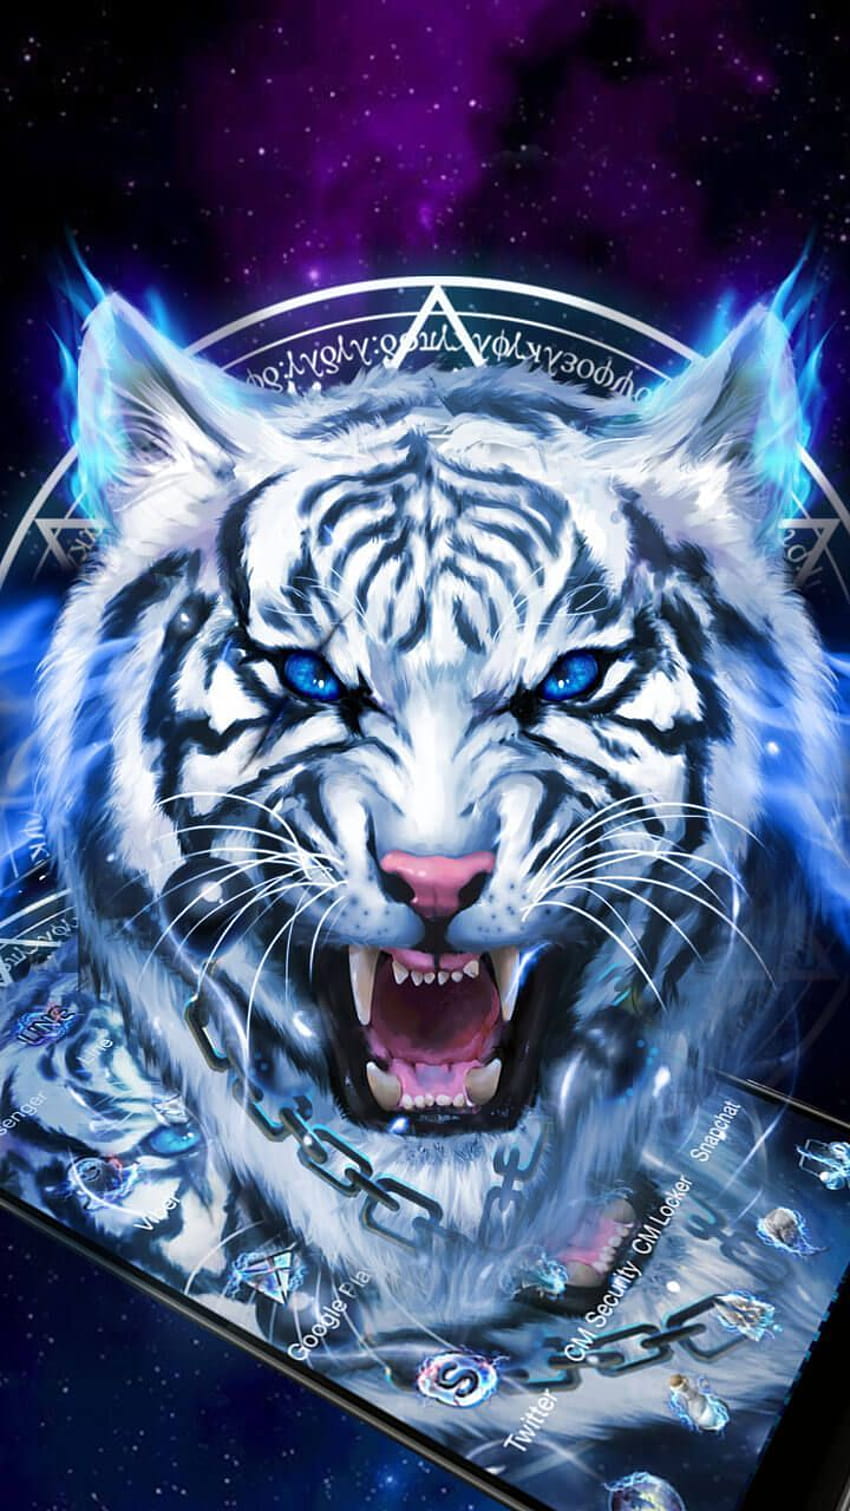 TAK KENAL TAKUT !! Ice Neon Tiger Theme., kepala harimau android wallpaper ponsel HD